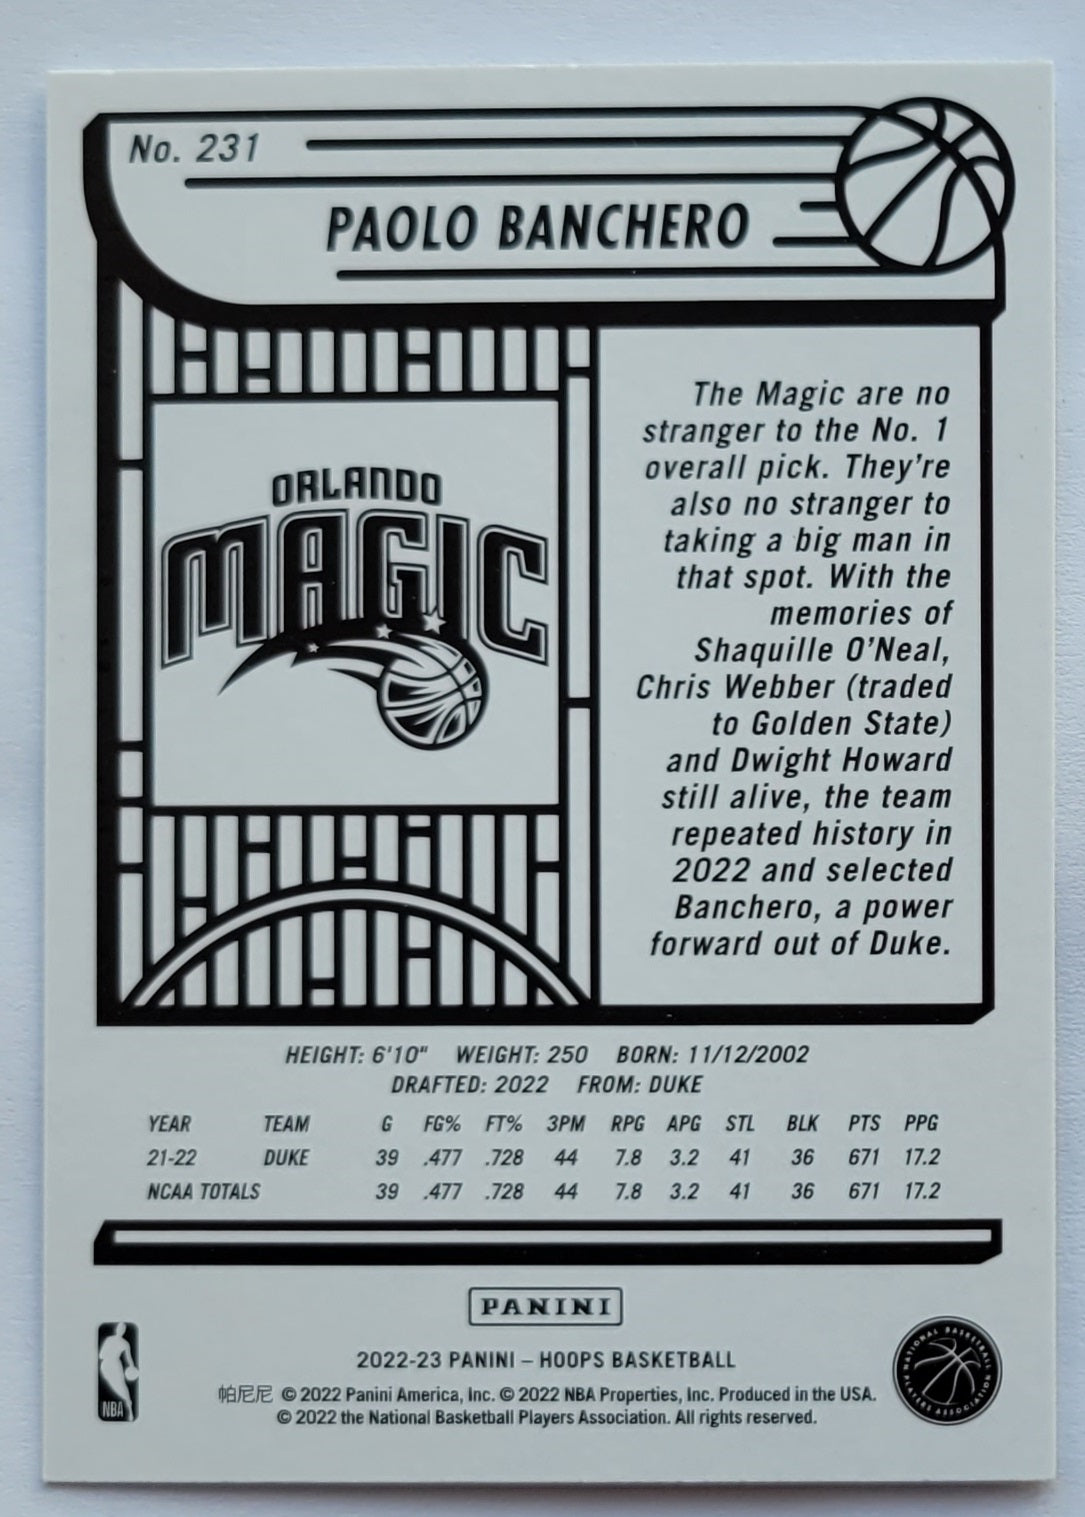 Paolo Banchero - 2022-23 Hoops Winter #231 RC